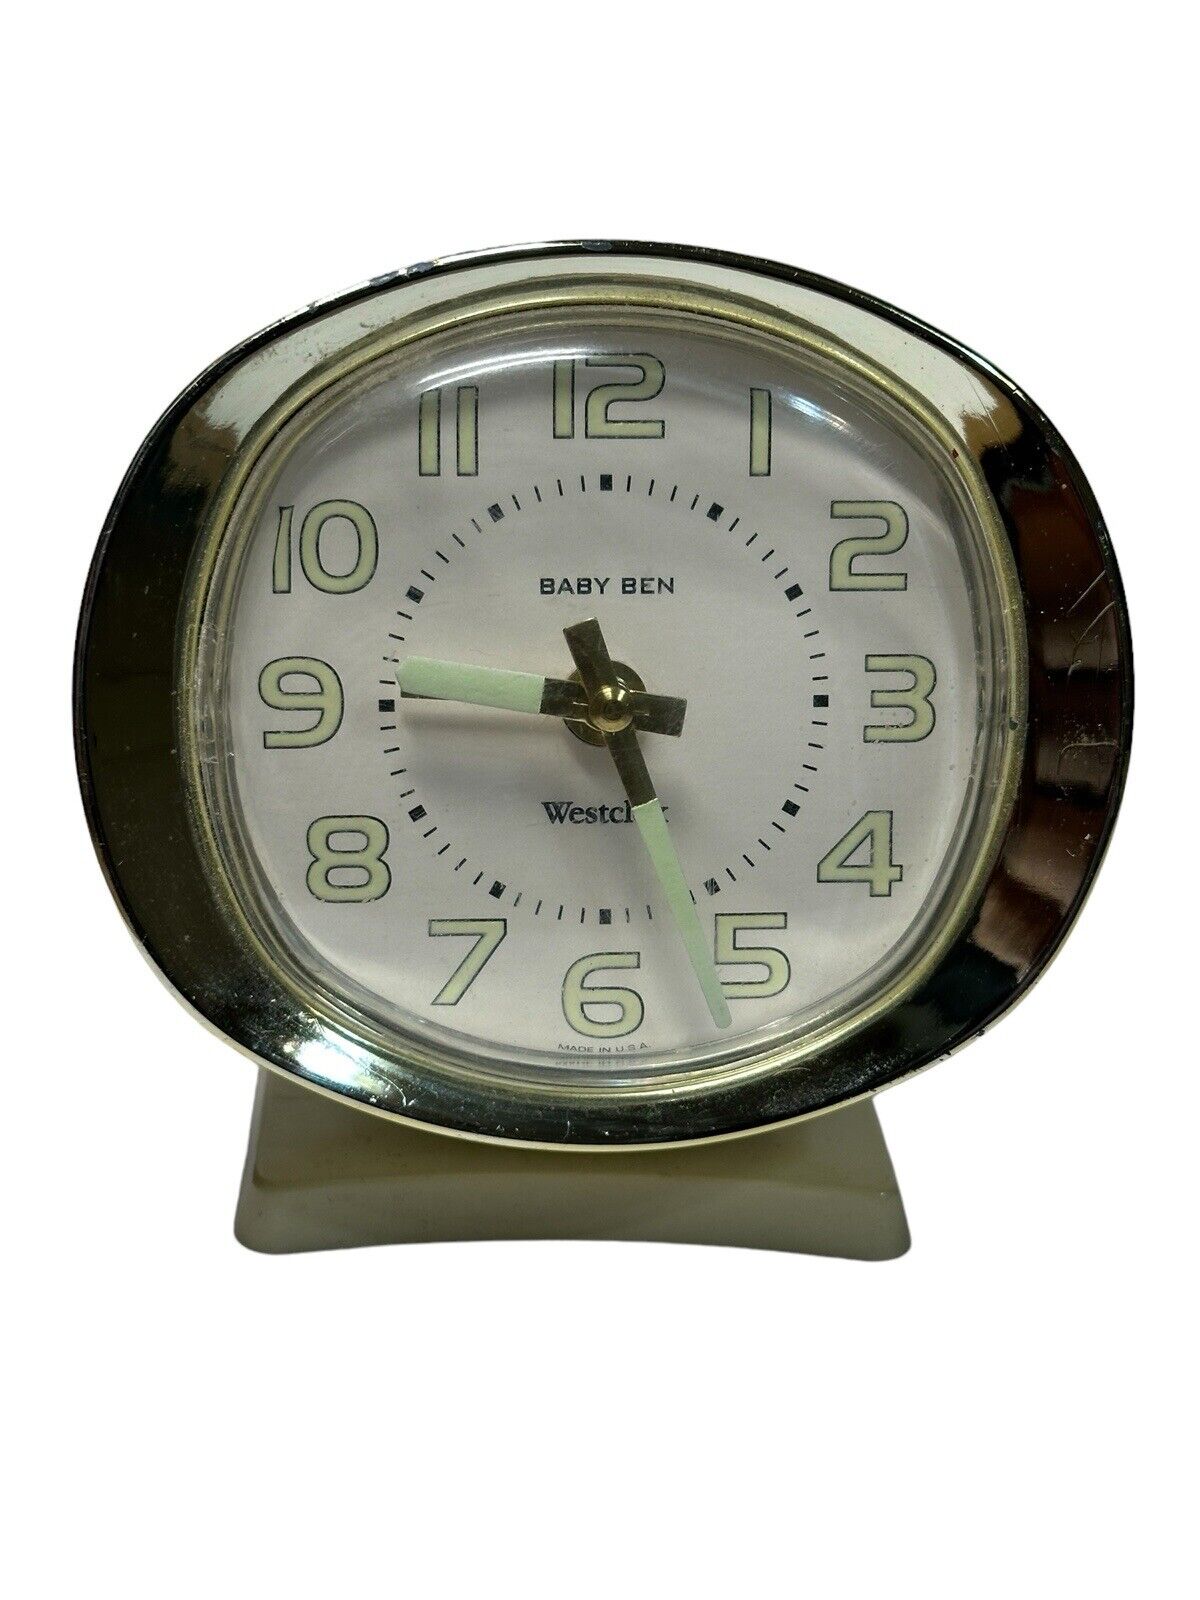 Vintage Westclox Alarm Clock, Baby Ben. Wind-up model. Works. Made In USA